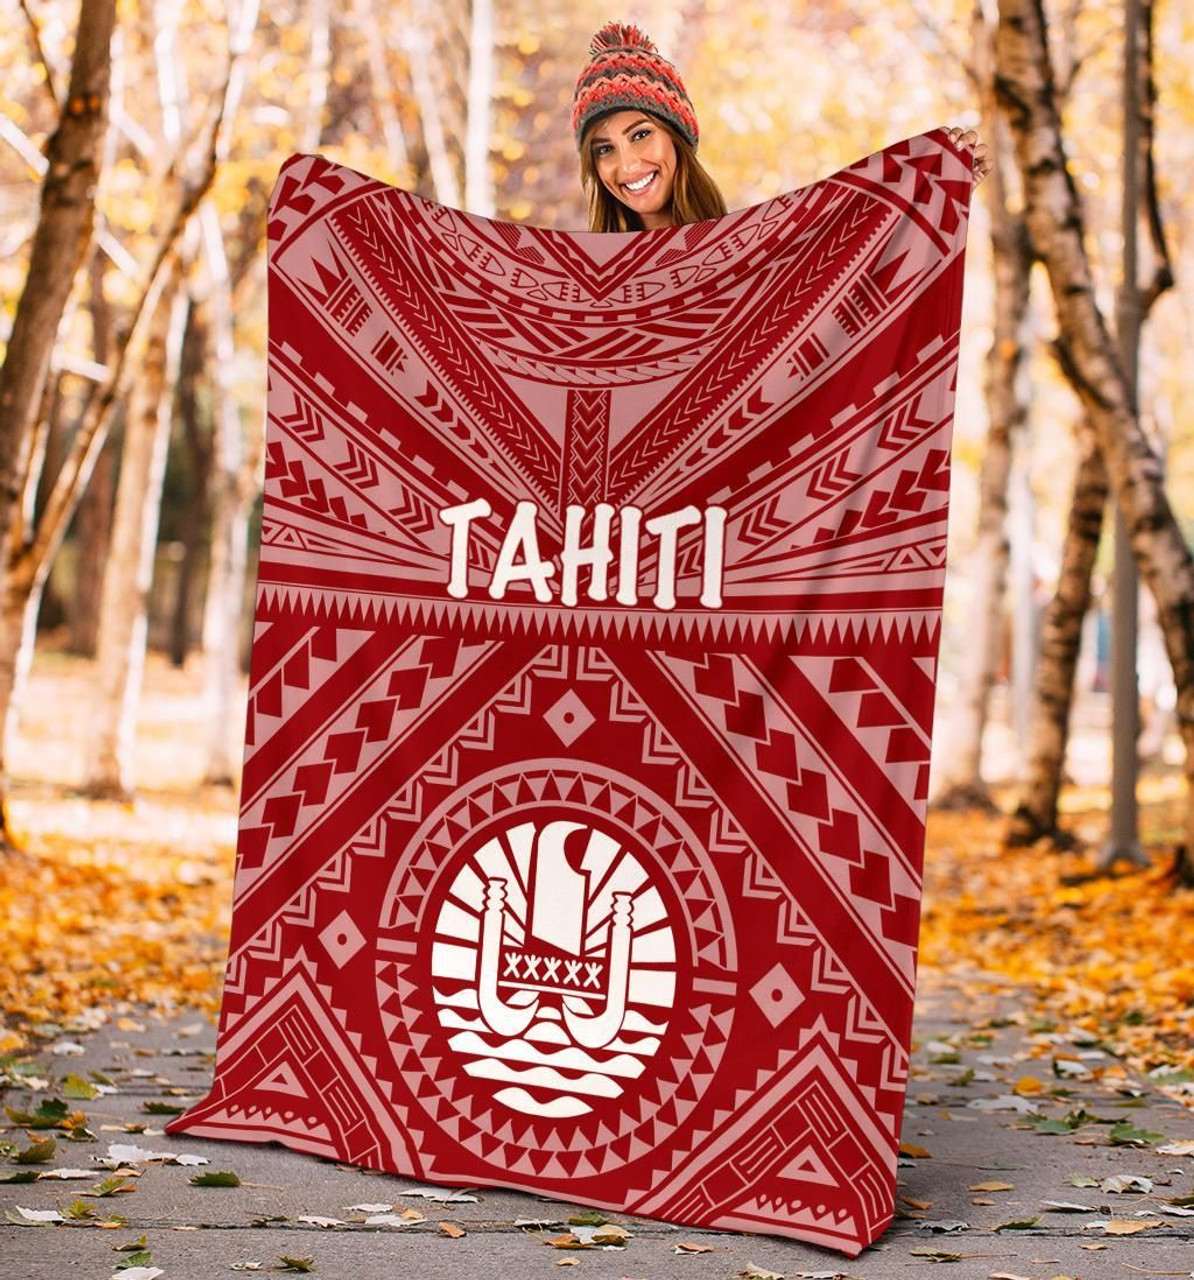 Tahiti Premium Blanket - Tahiti Seal In Polynesian Tattoo Style (Red) 4